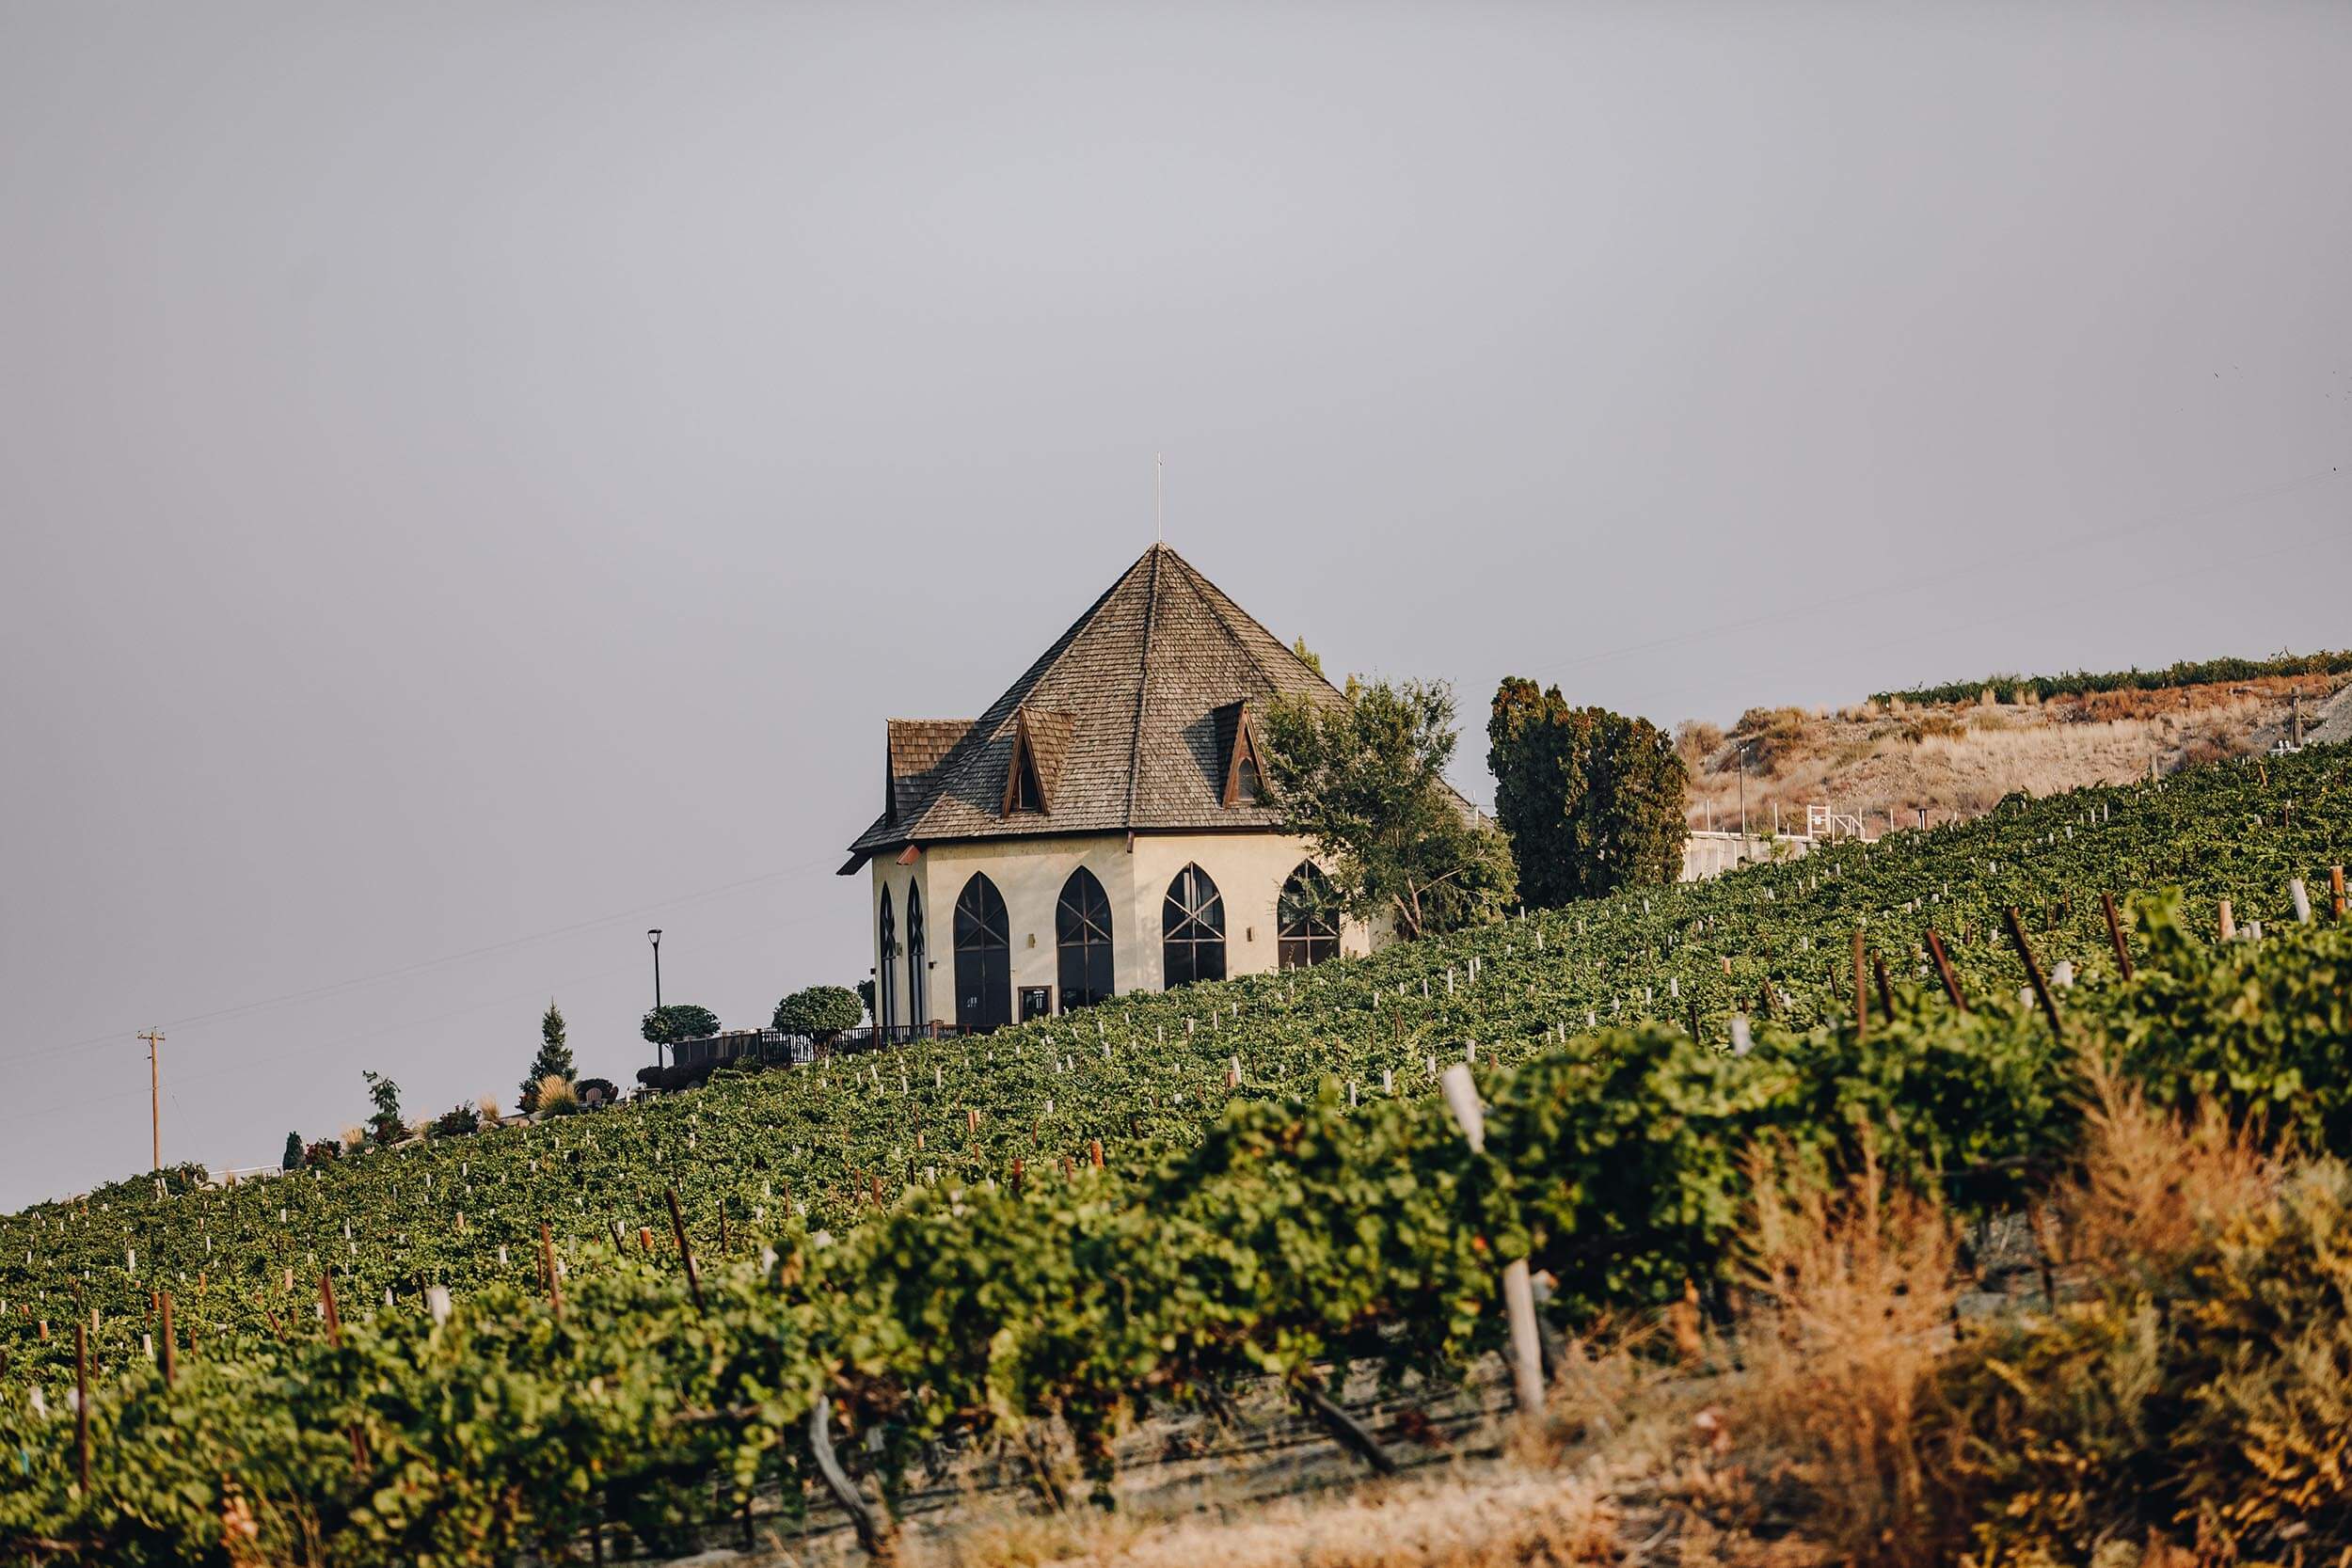 Ste. Chapelle Winery tasting room beside a vineyard on a sloped landscape.